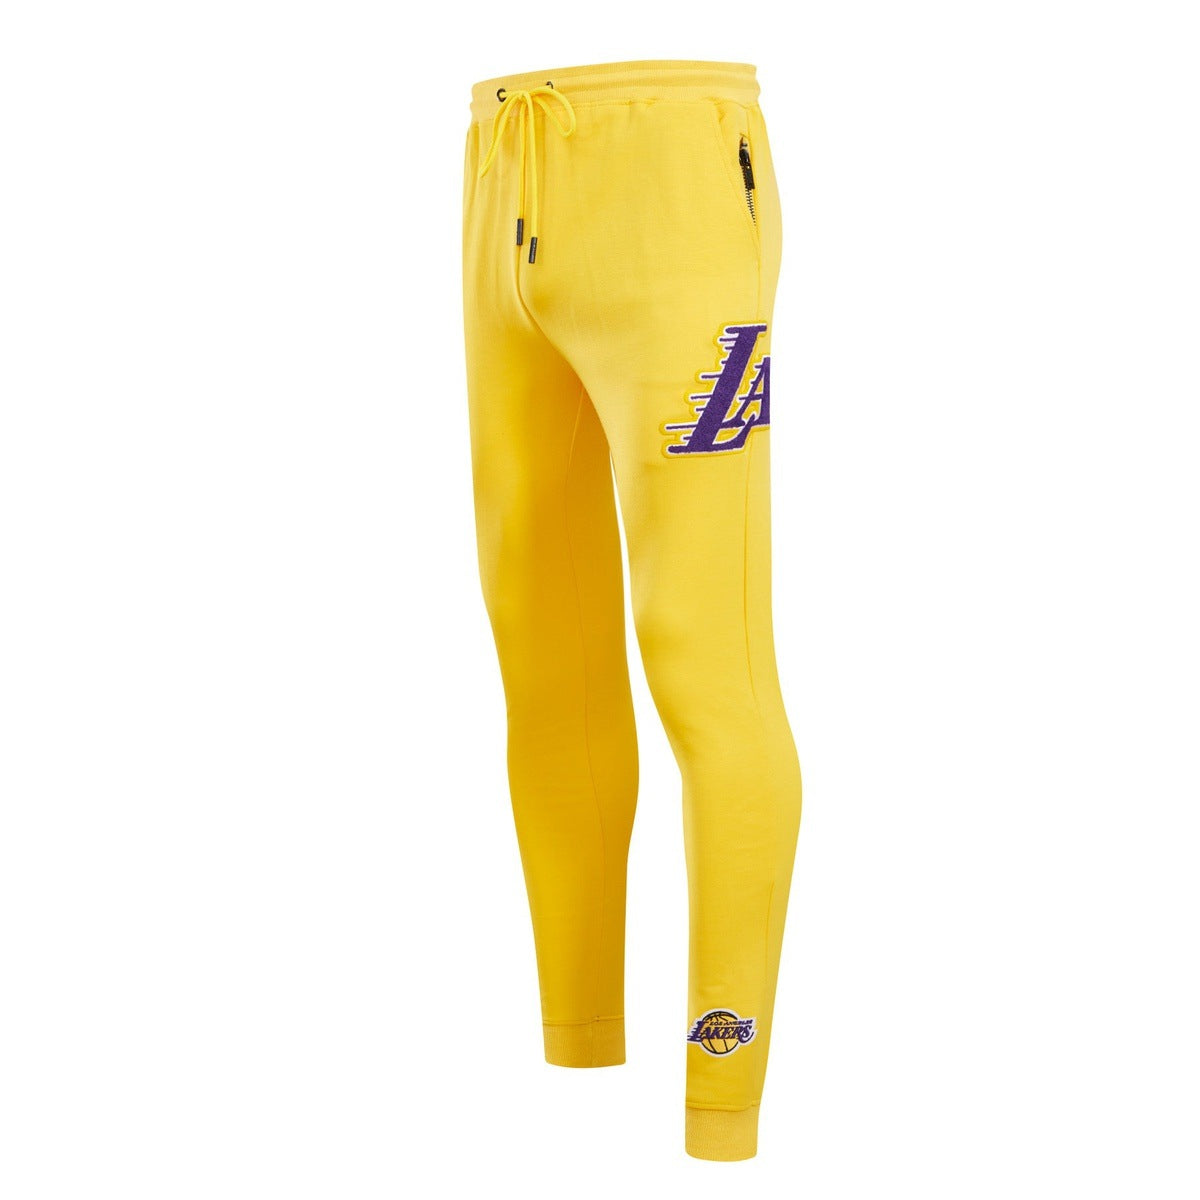 Titolo Shop - season start 🏀 The Los Angeles Lakers